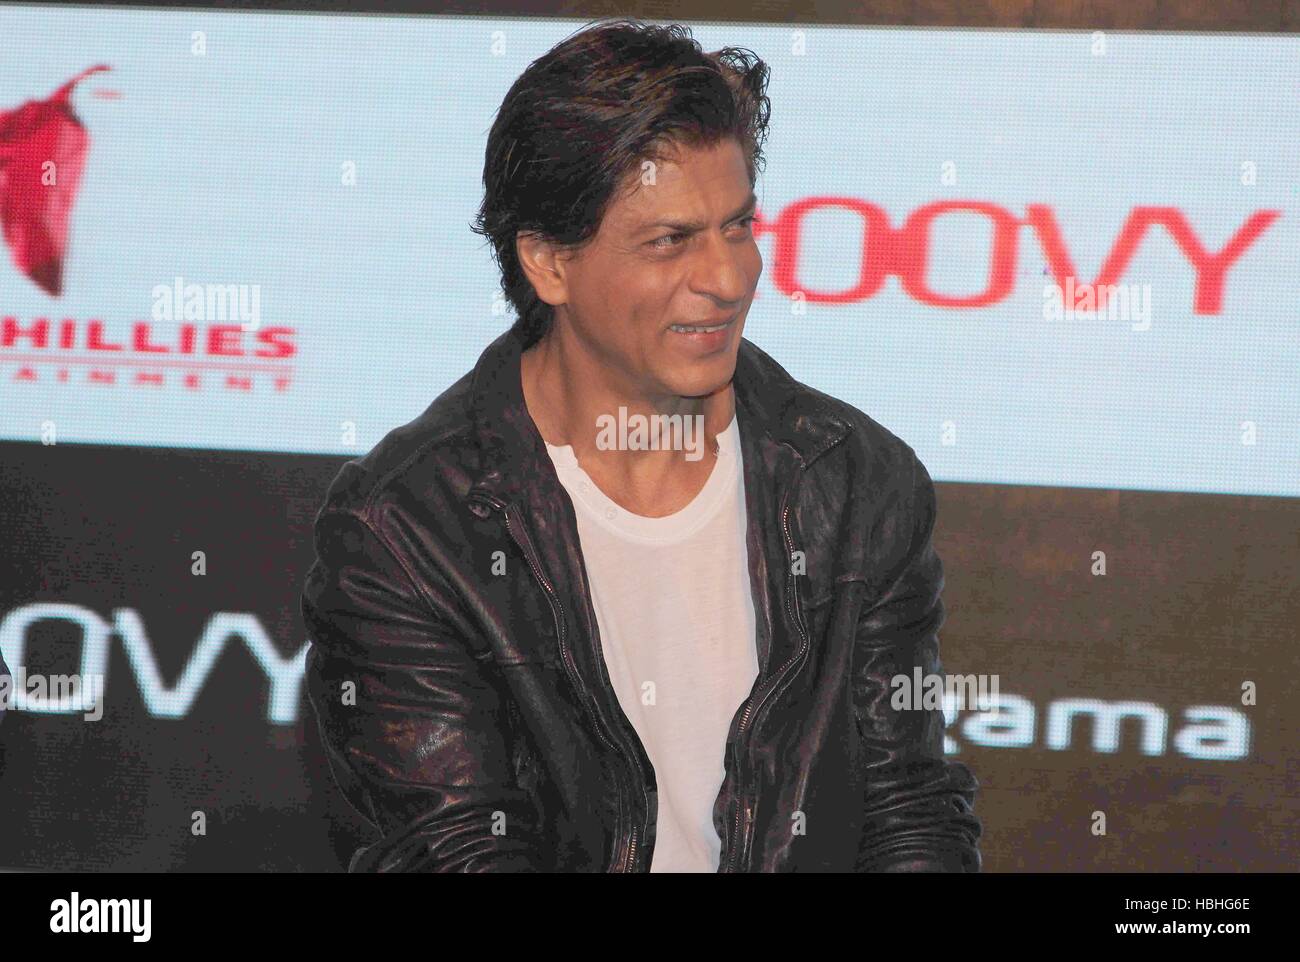 Ritratto di Bollywood attore Shah Rukh Khan, maglietta bianca, giacca nera, al film Happy New Year evento a Mumbai, India Foto Stock